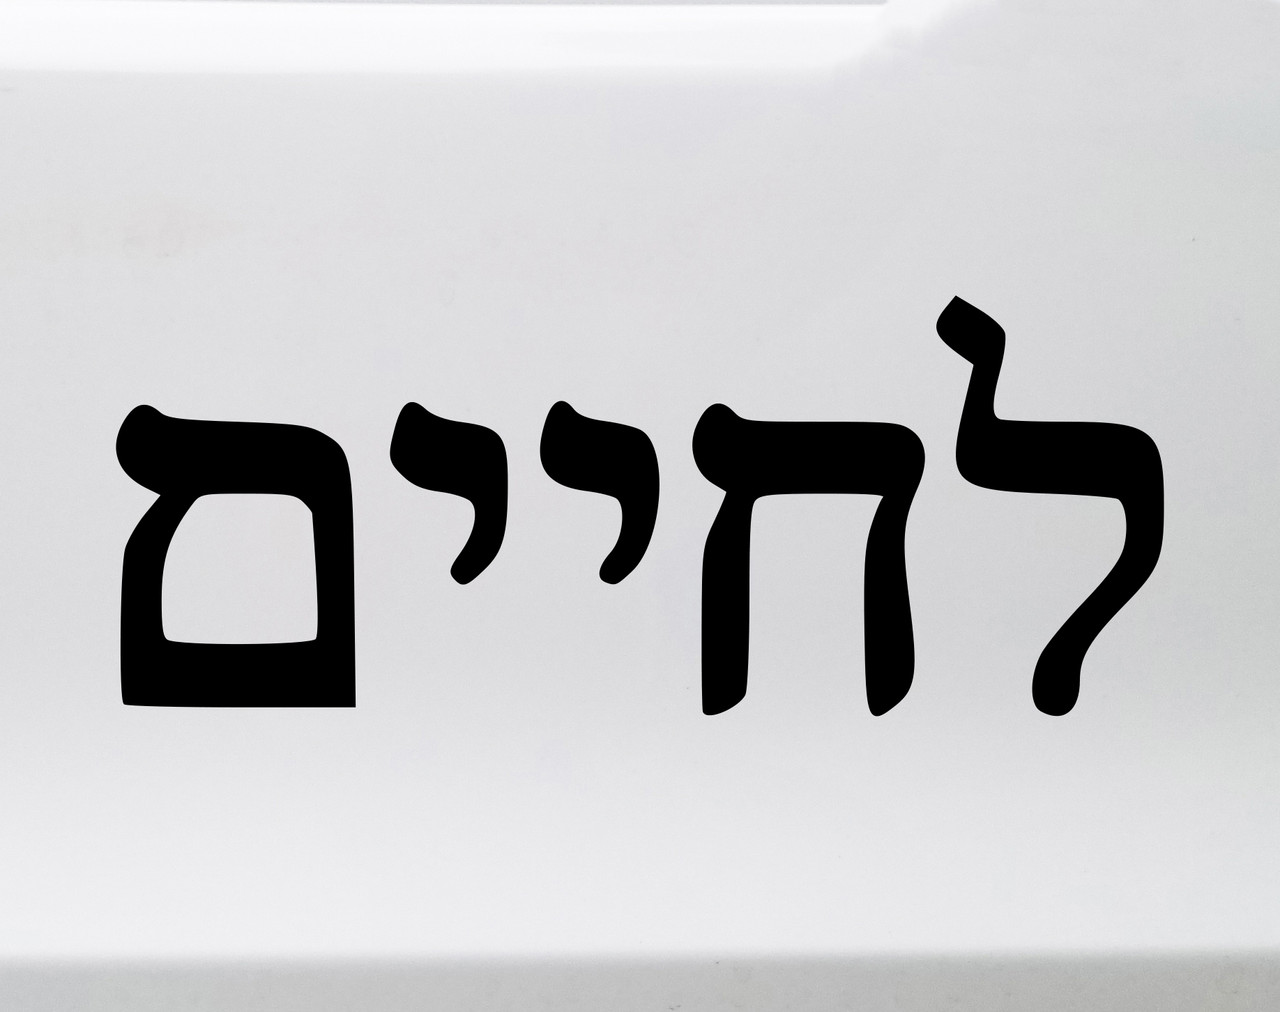 L'Chaim LeChaim Hebrew Script Vinyl Decal - To Life! Jewish Toast - Die Cut Sticker